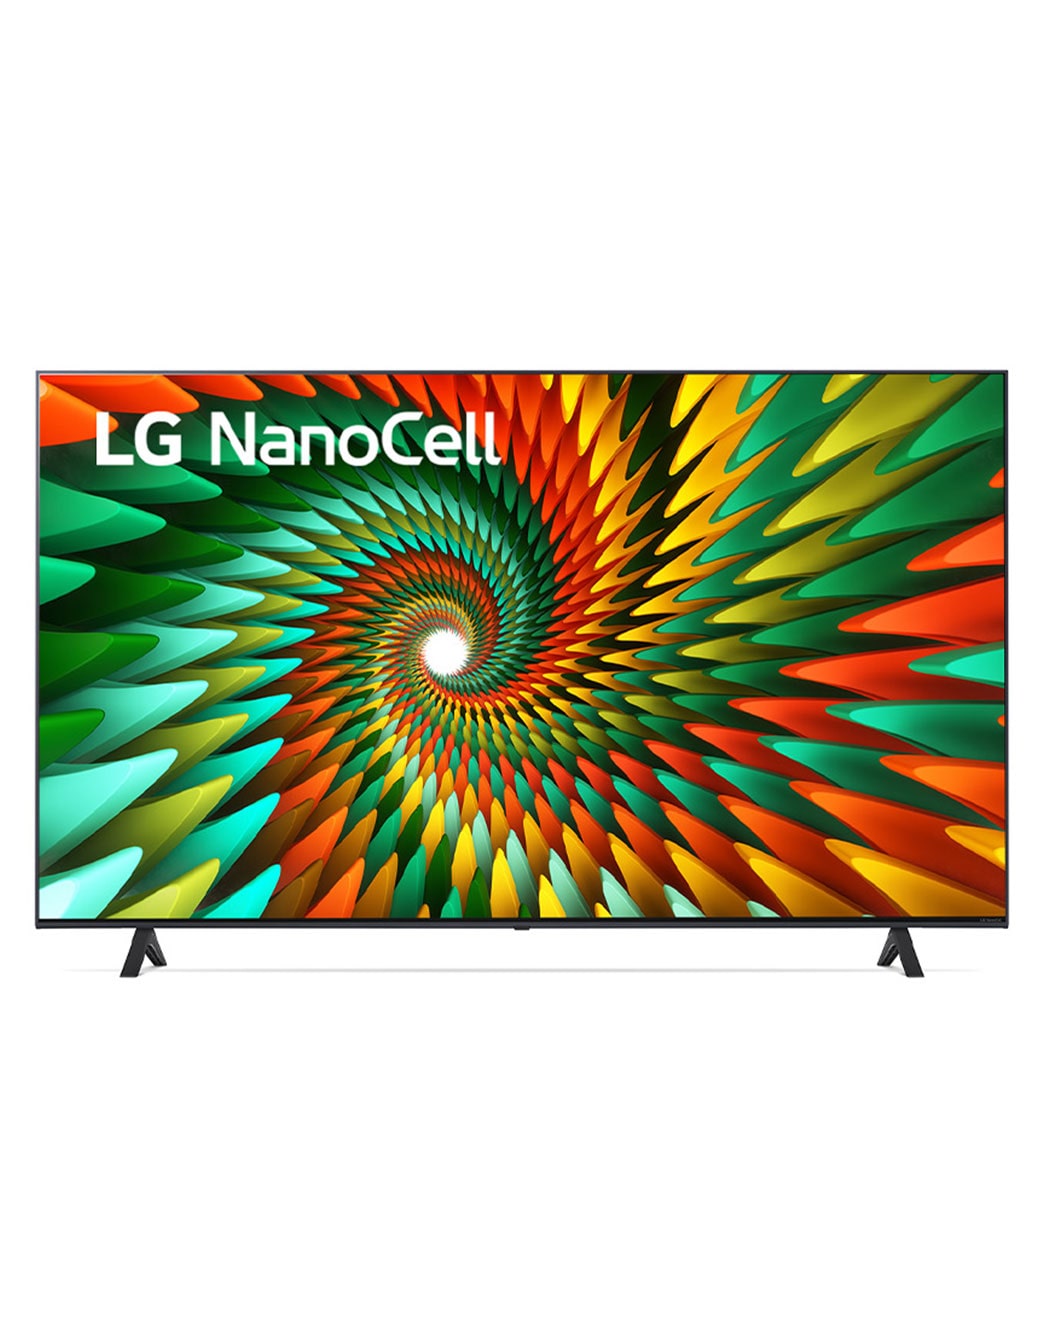 Televisor LG NanoCell Smart TV 65 4K UHD